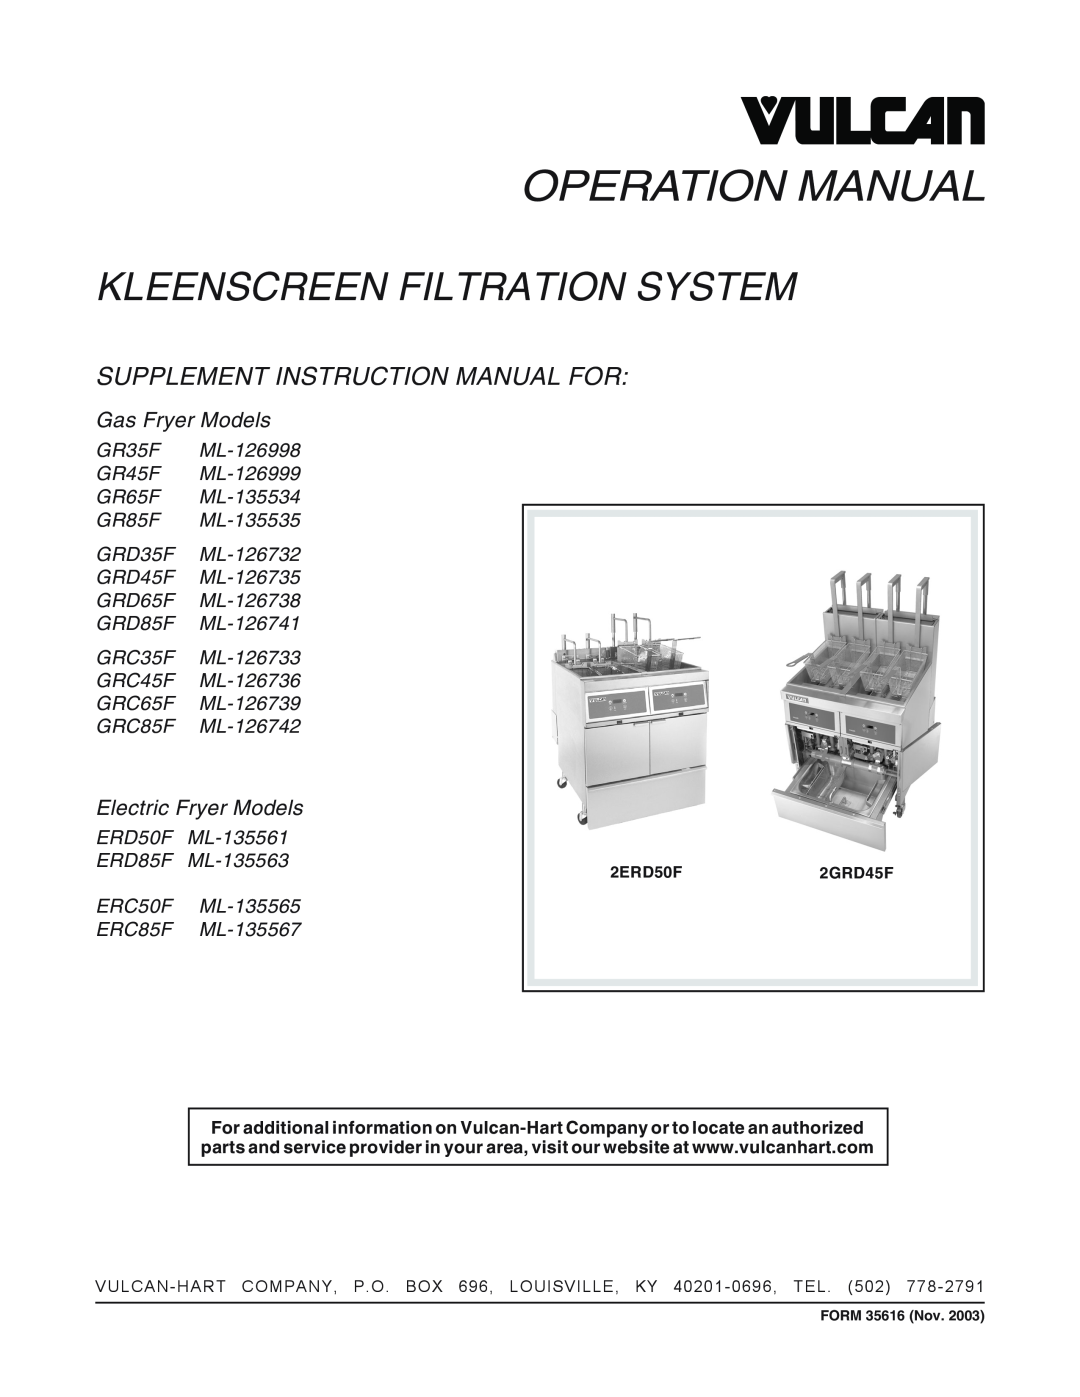 Vulcan-Hart GRD45F ML-126735 operation manual Kleenscreen Filtration System, Gas Fryer Models, Electric Fryer Models 